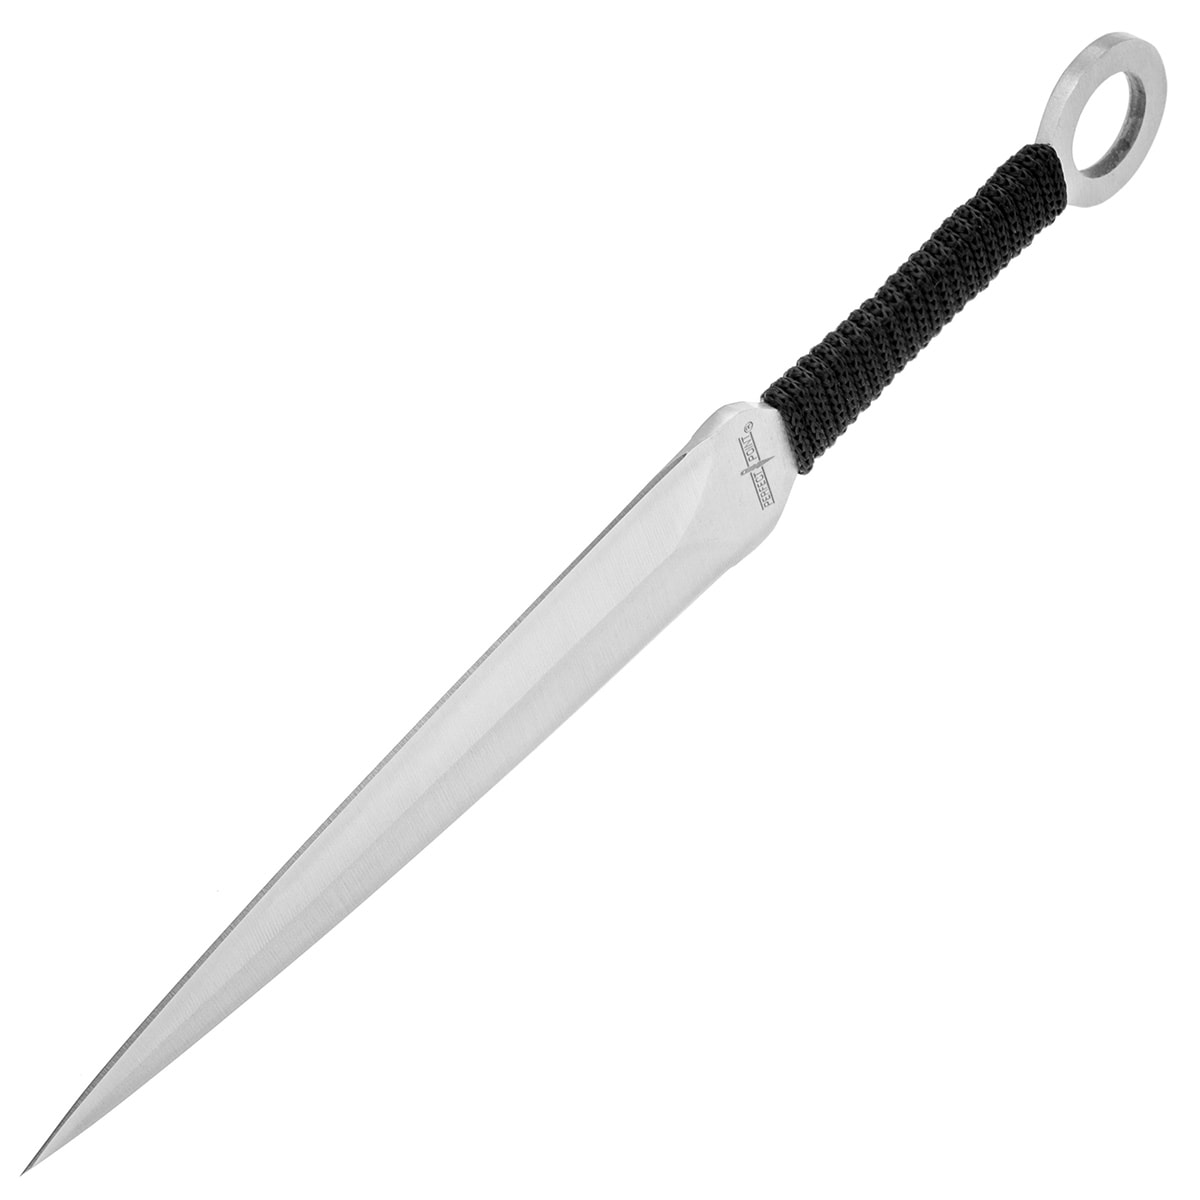 Набір метальних ножів Master Cutlery 8.5